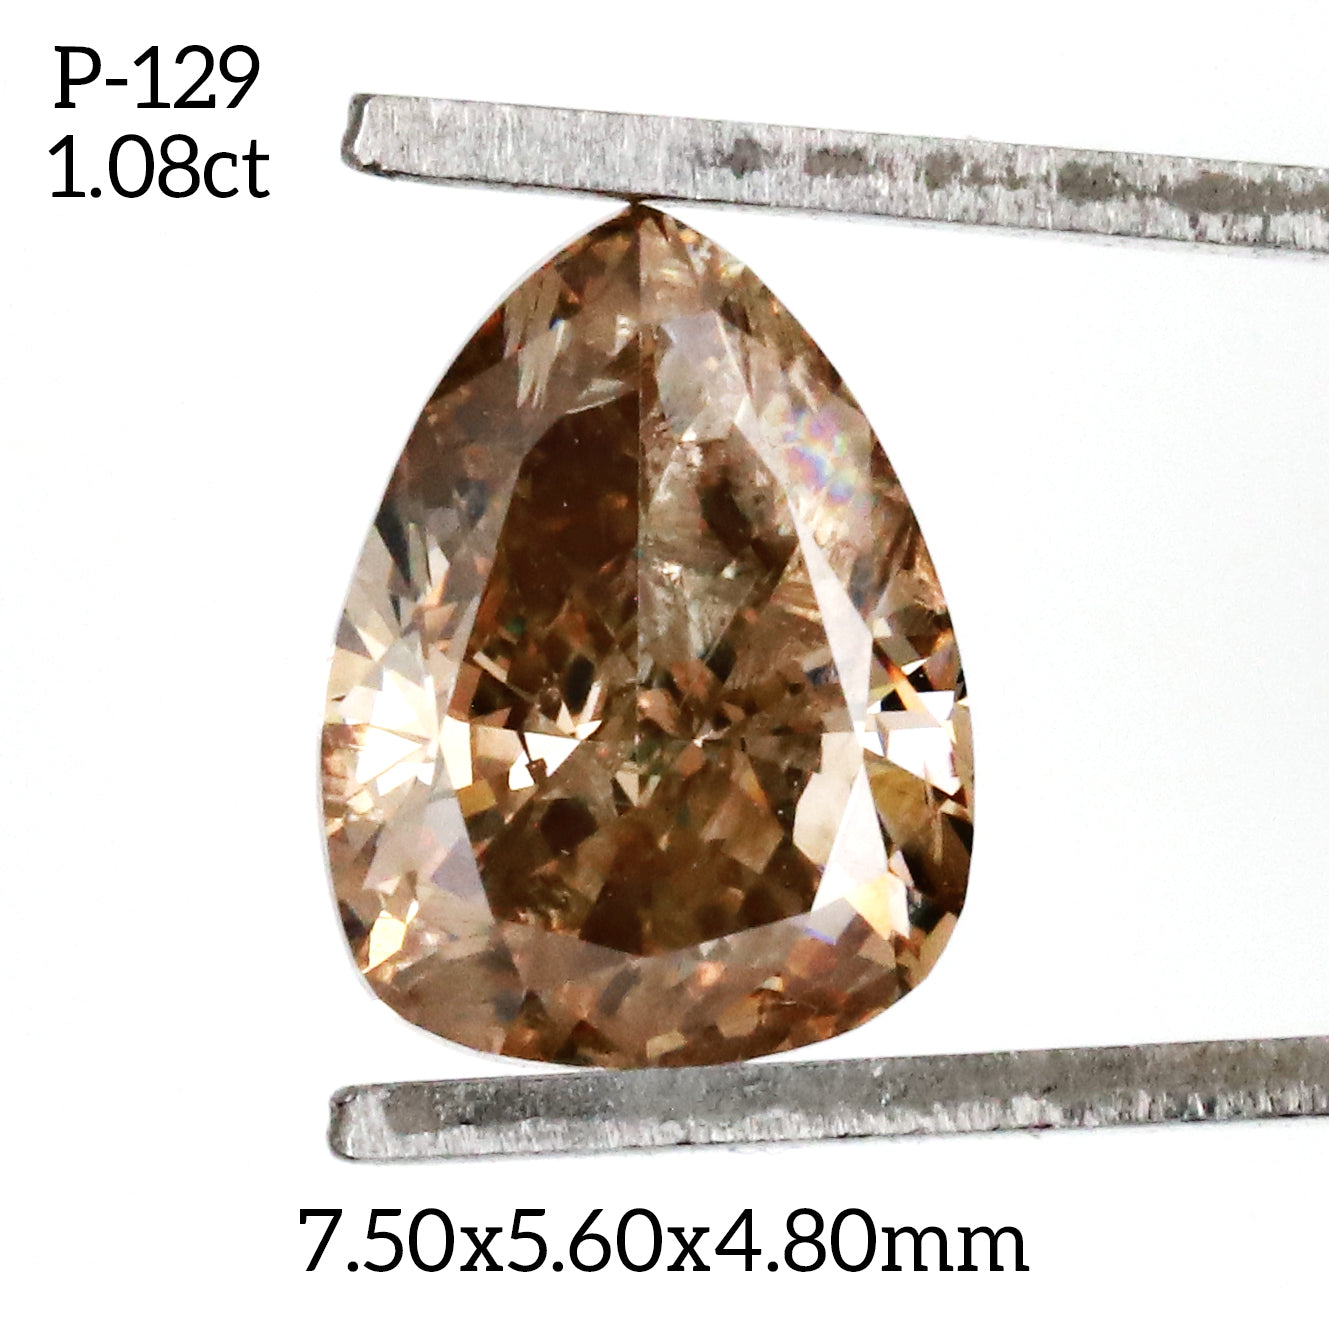 P129 - Salt and pepper pear diamond